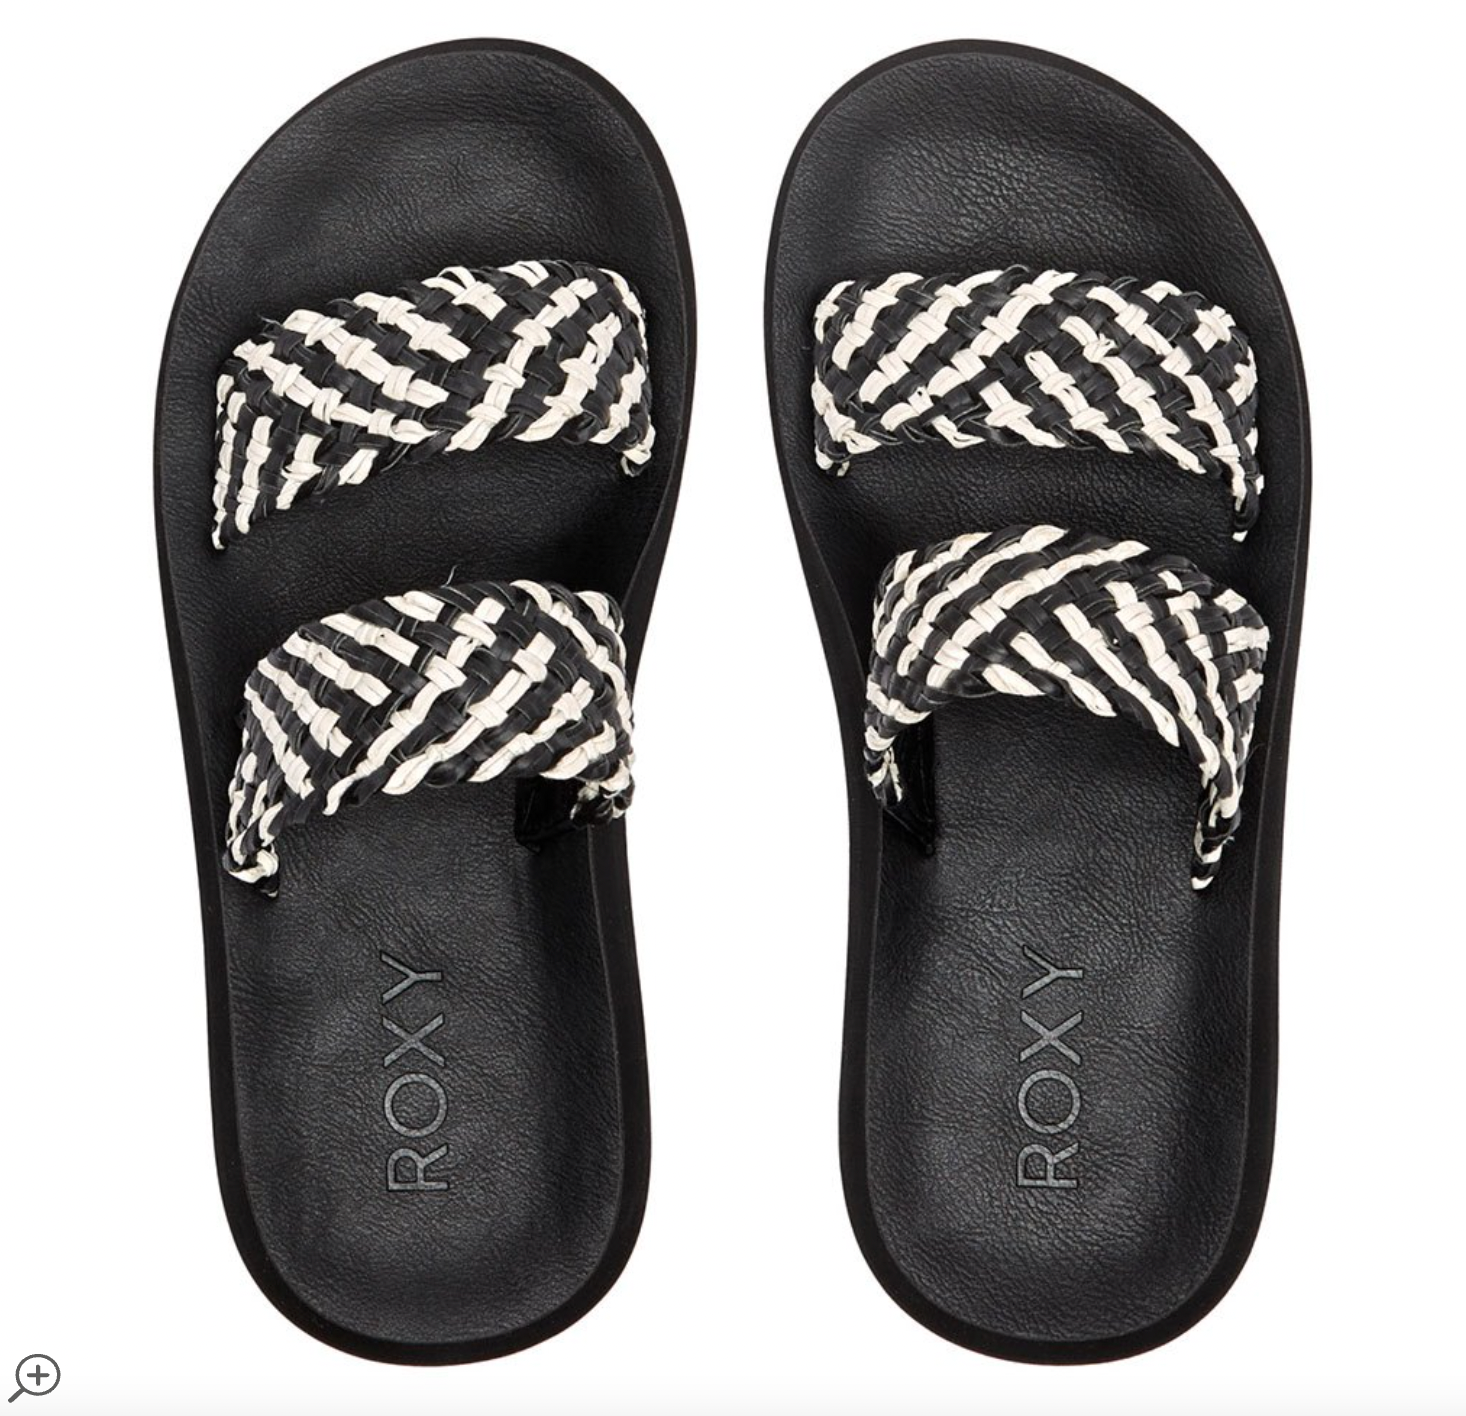 Roxy Colette Slide Sandals